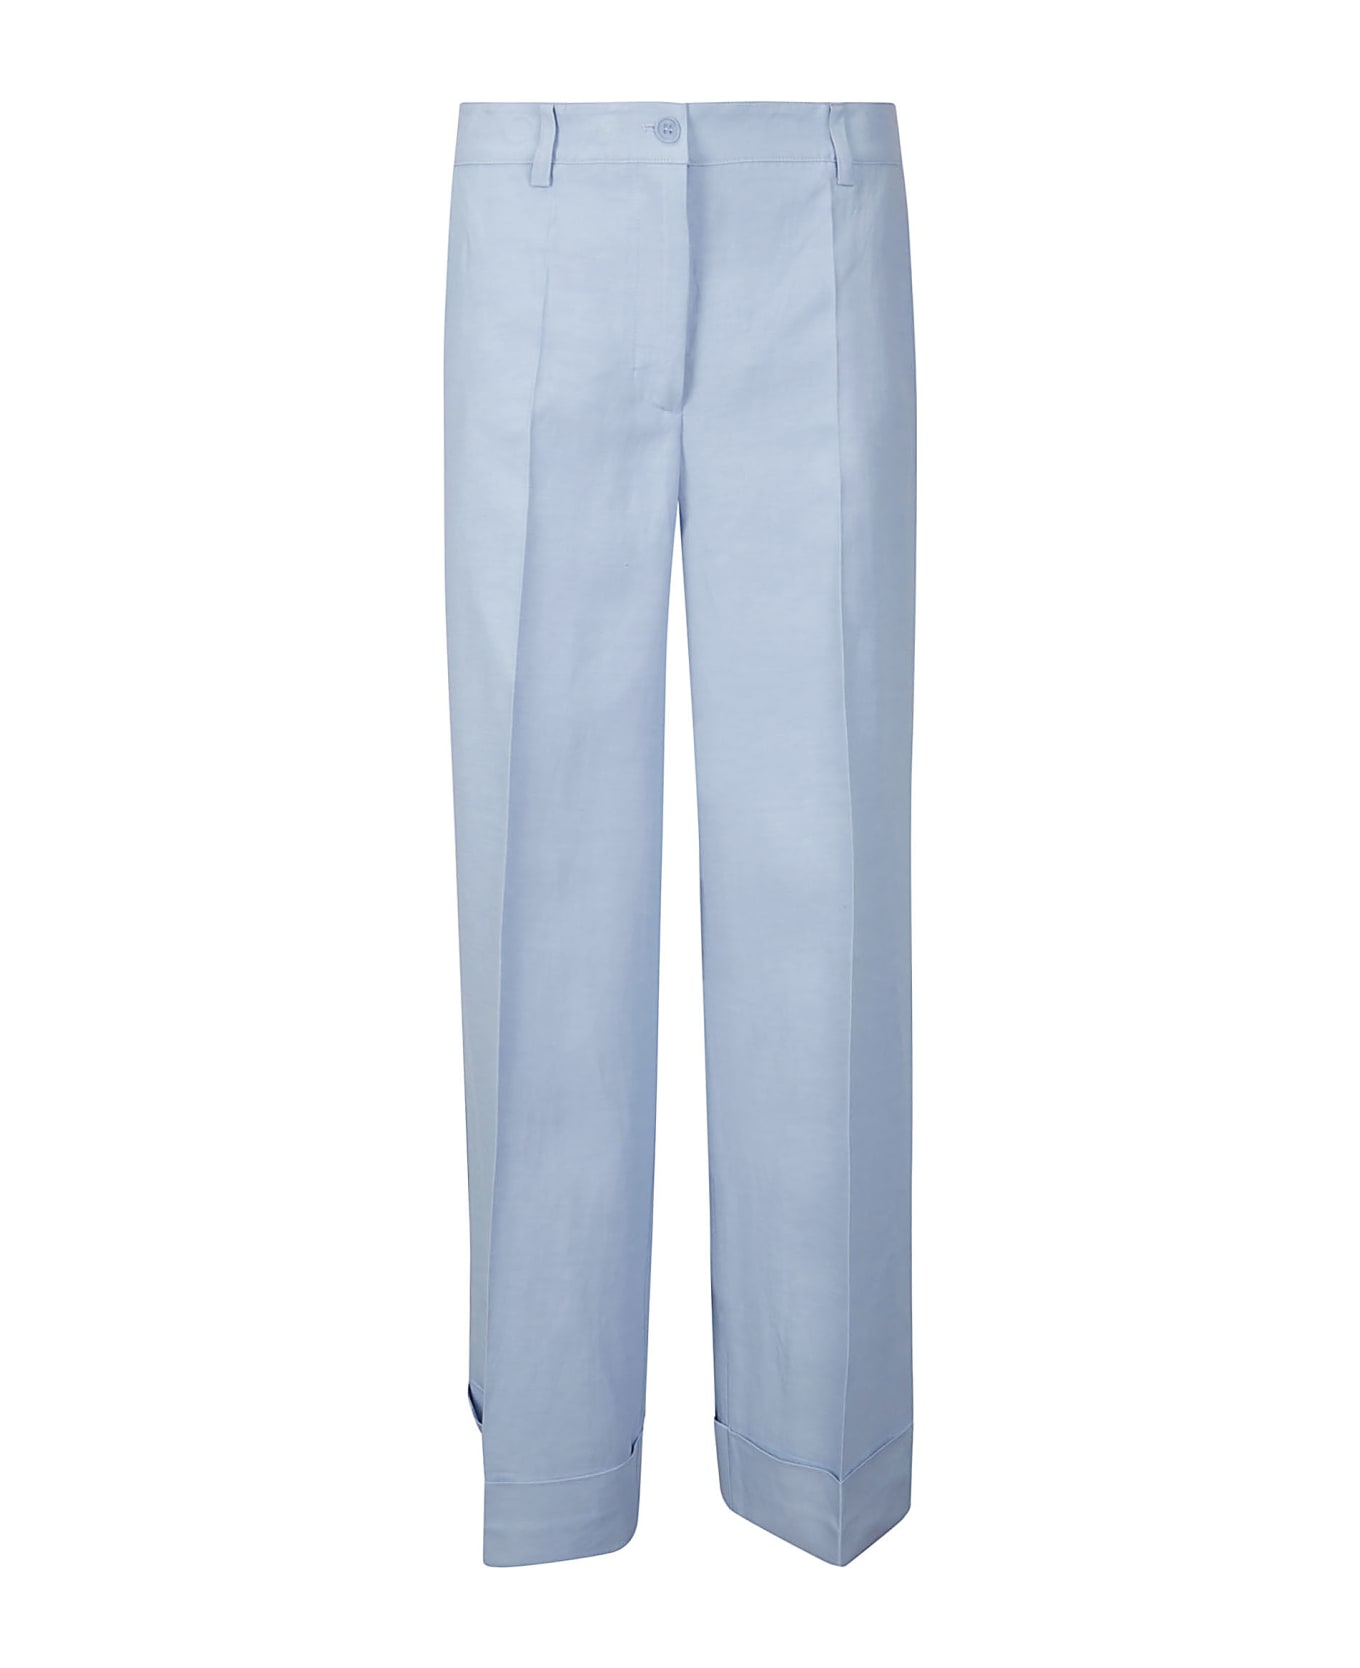 Parosh Trousers - POWDER BLUE